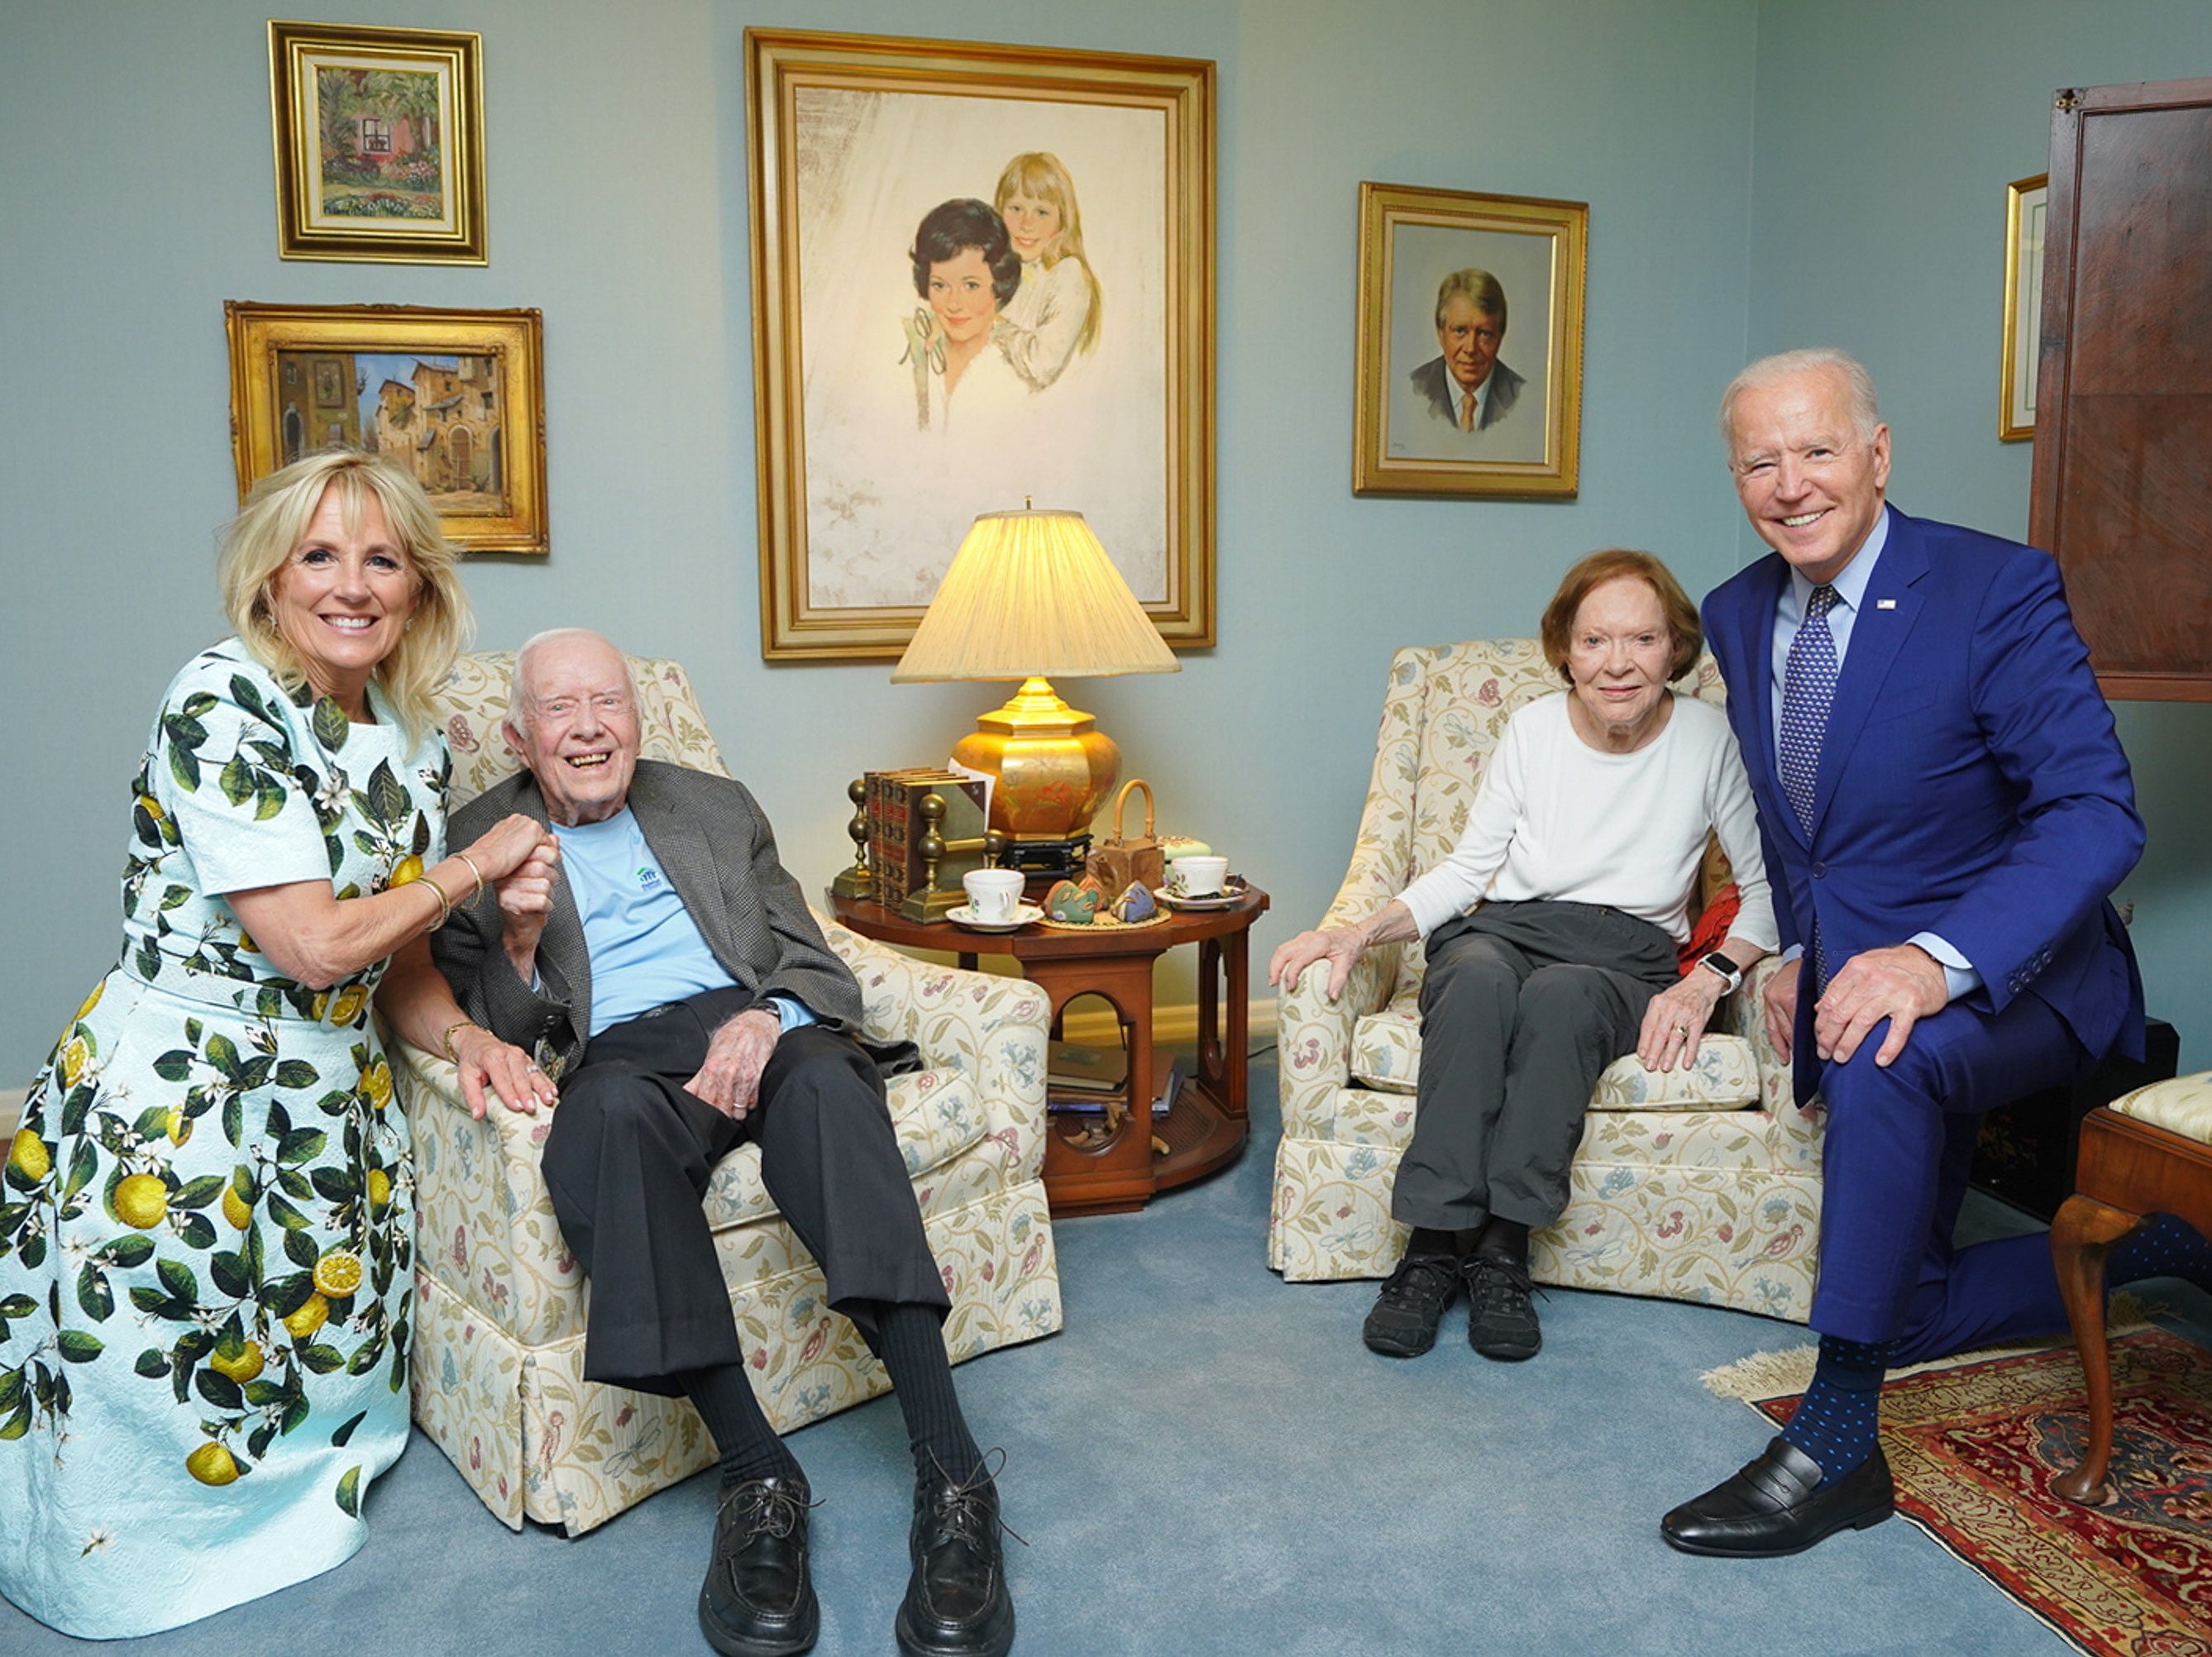 The Carter Centre released an image of the former president Jimmy Carter and former first lady, Rosalynn Carter, alongside Joe Biden and Dr Jill Biden